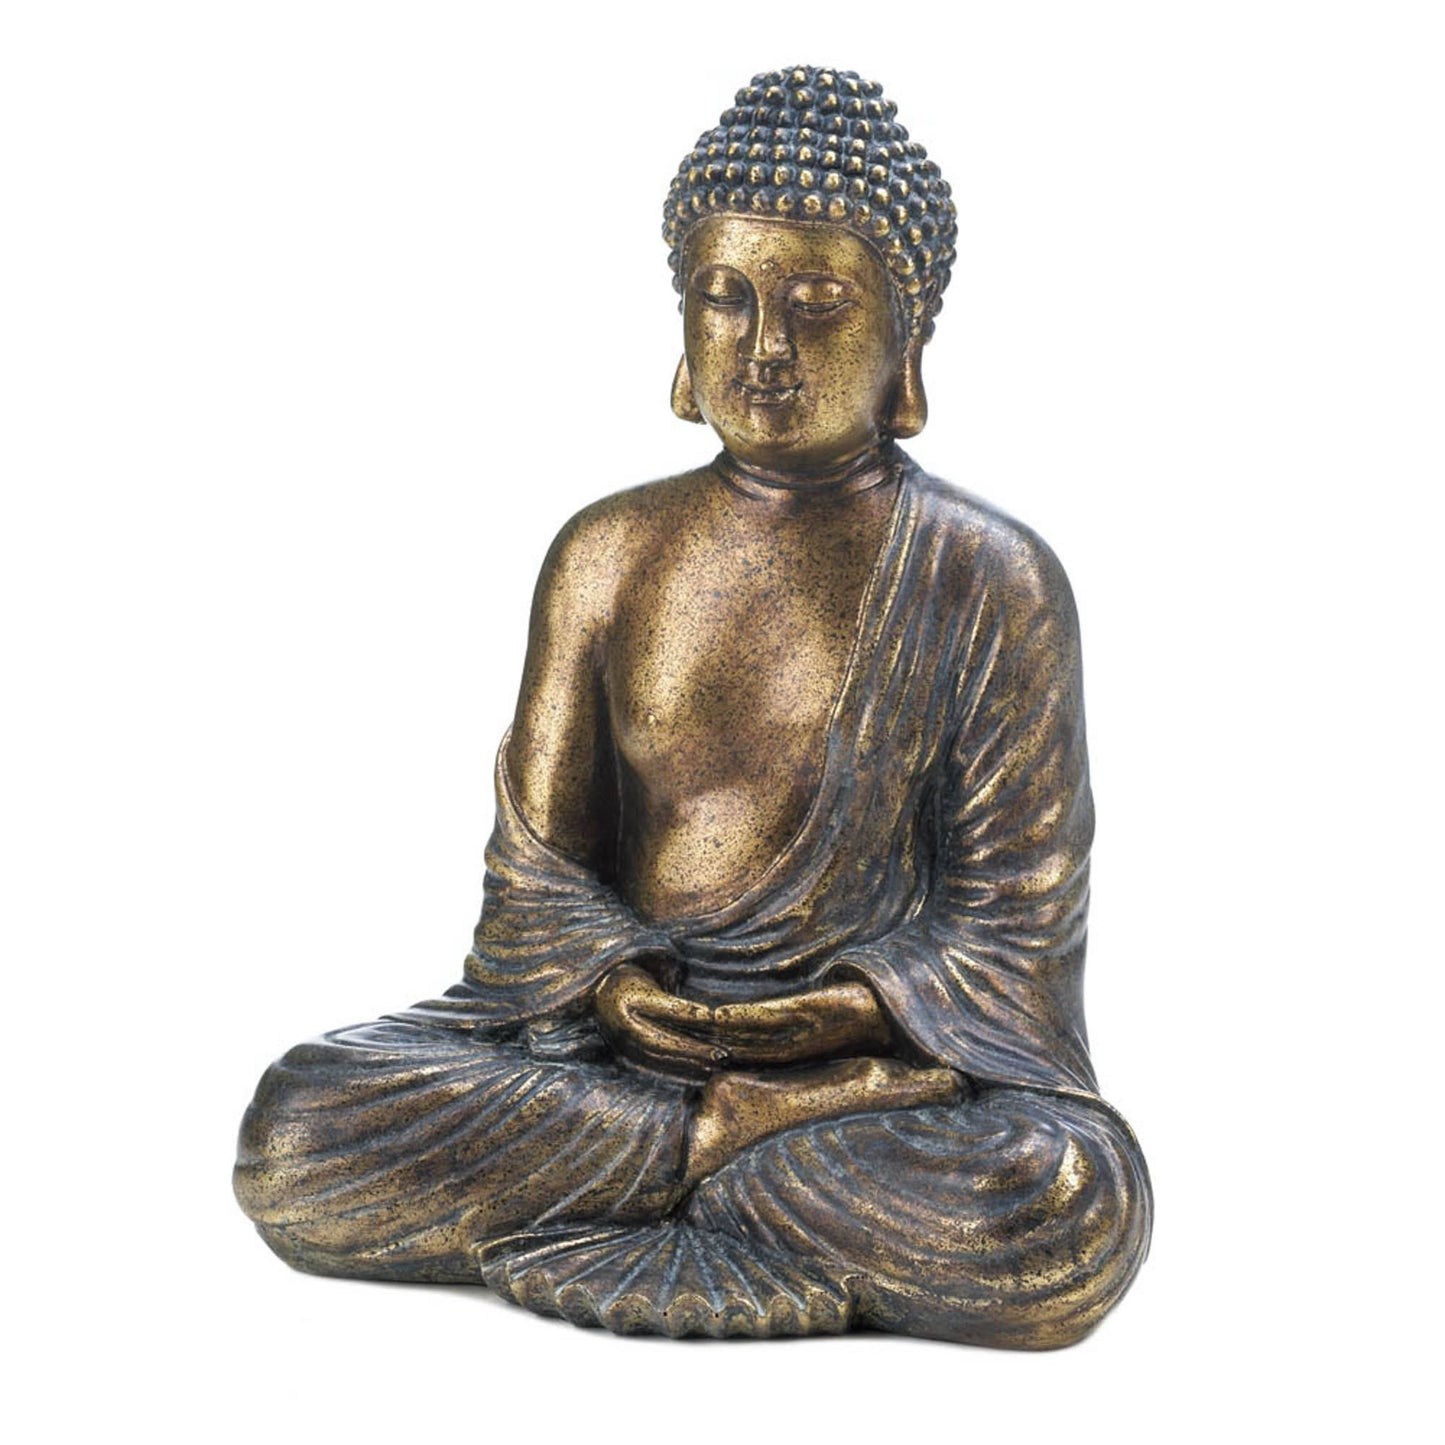 Meditating Sitting Zen Buddha Statue Seated Lotus Position Indoor Outdoor Home Decor Golden Finish